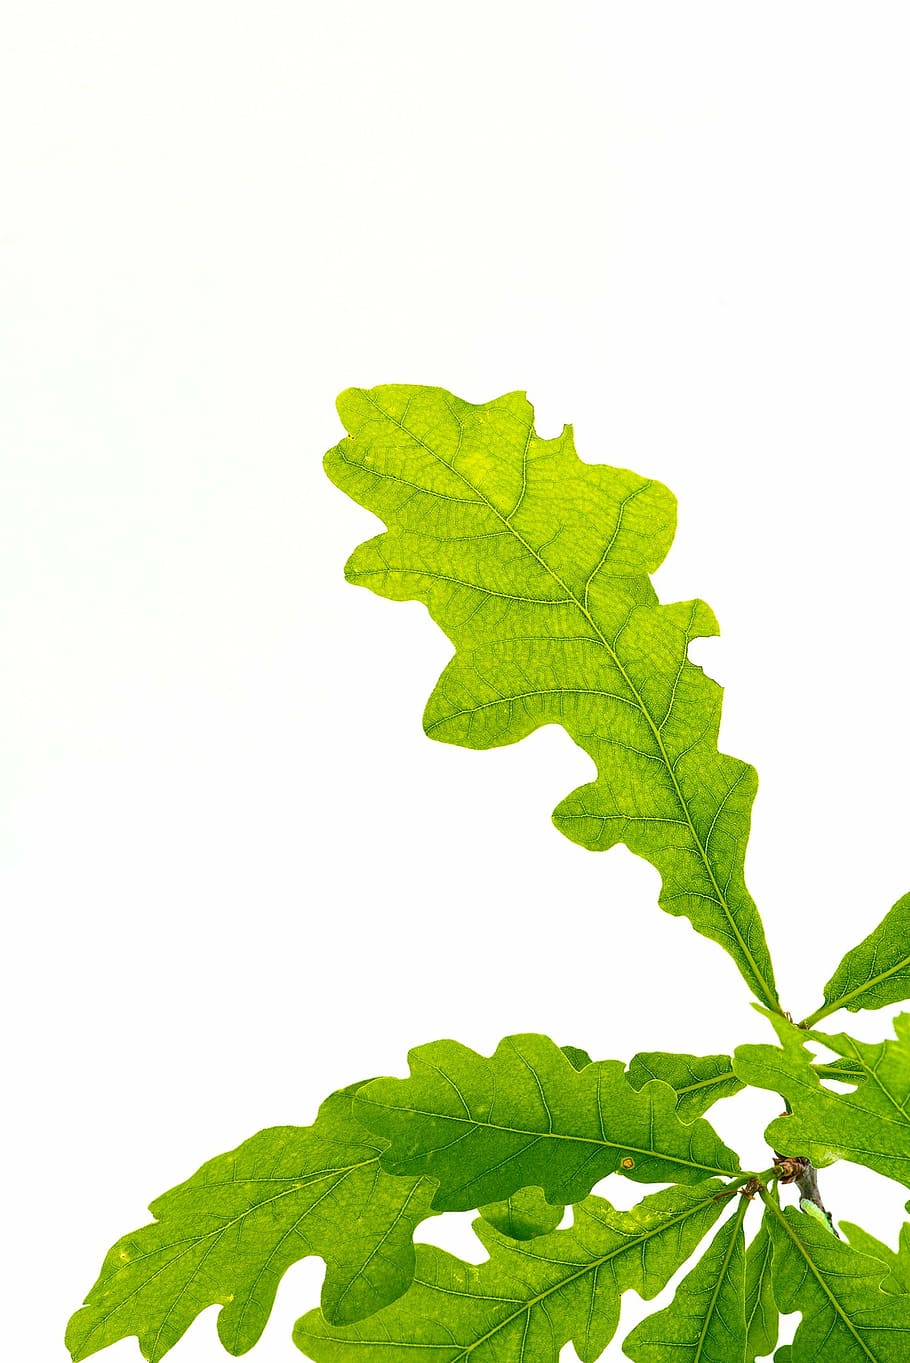 green leafed plant, leaves, green, oak leaves, leaf structure, tree leaf, leaf veins, buchengewaechs, close, nature